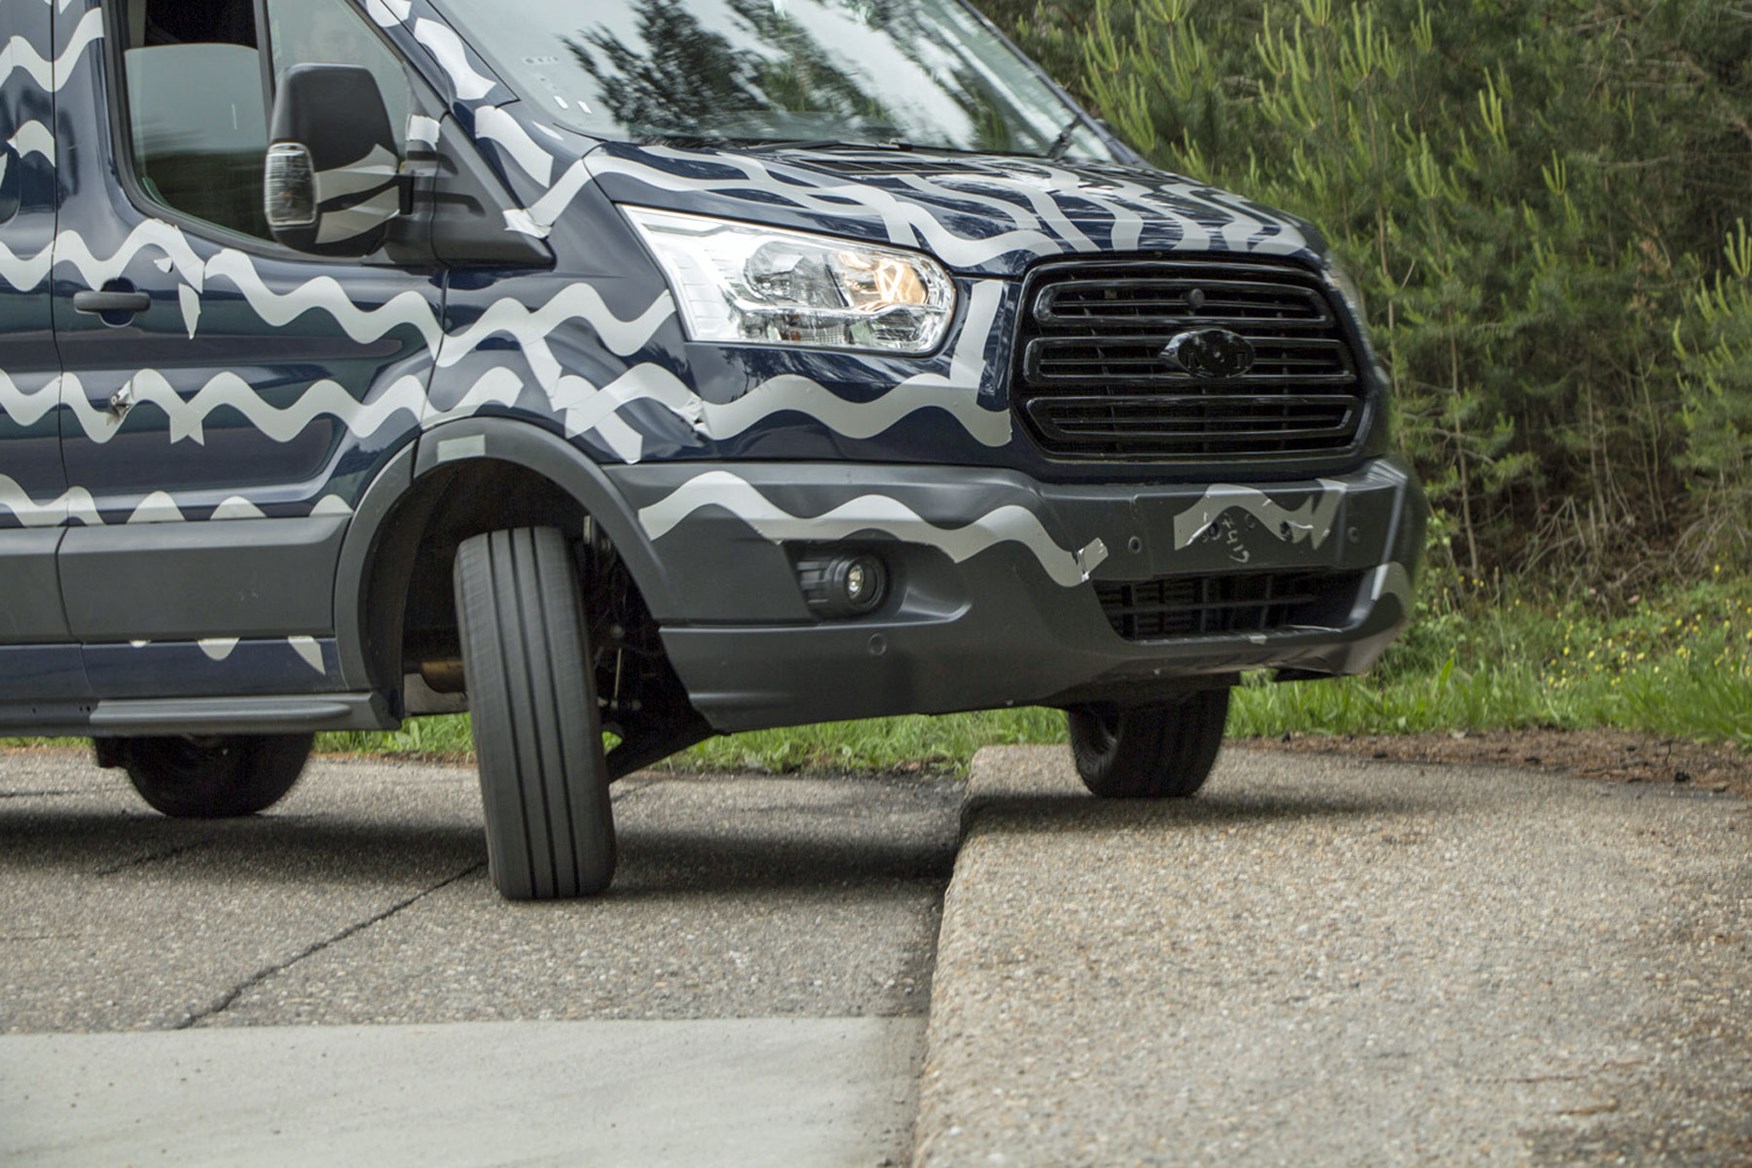 Ford Transit (2014-on) durability testing